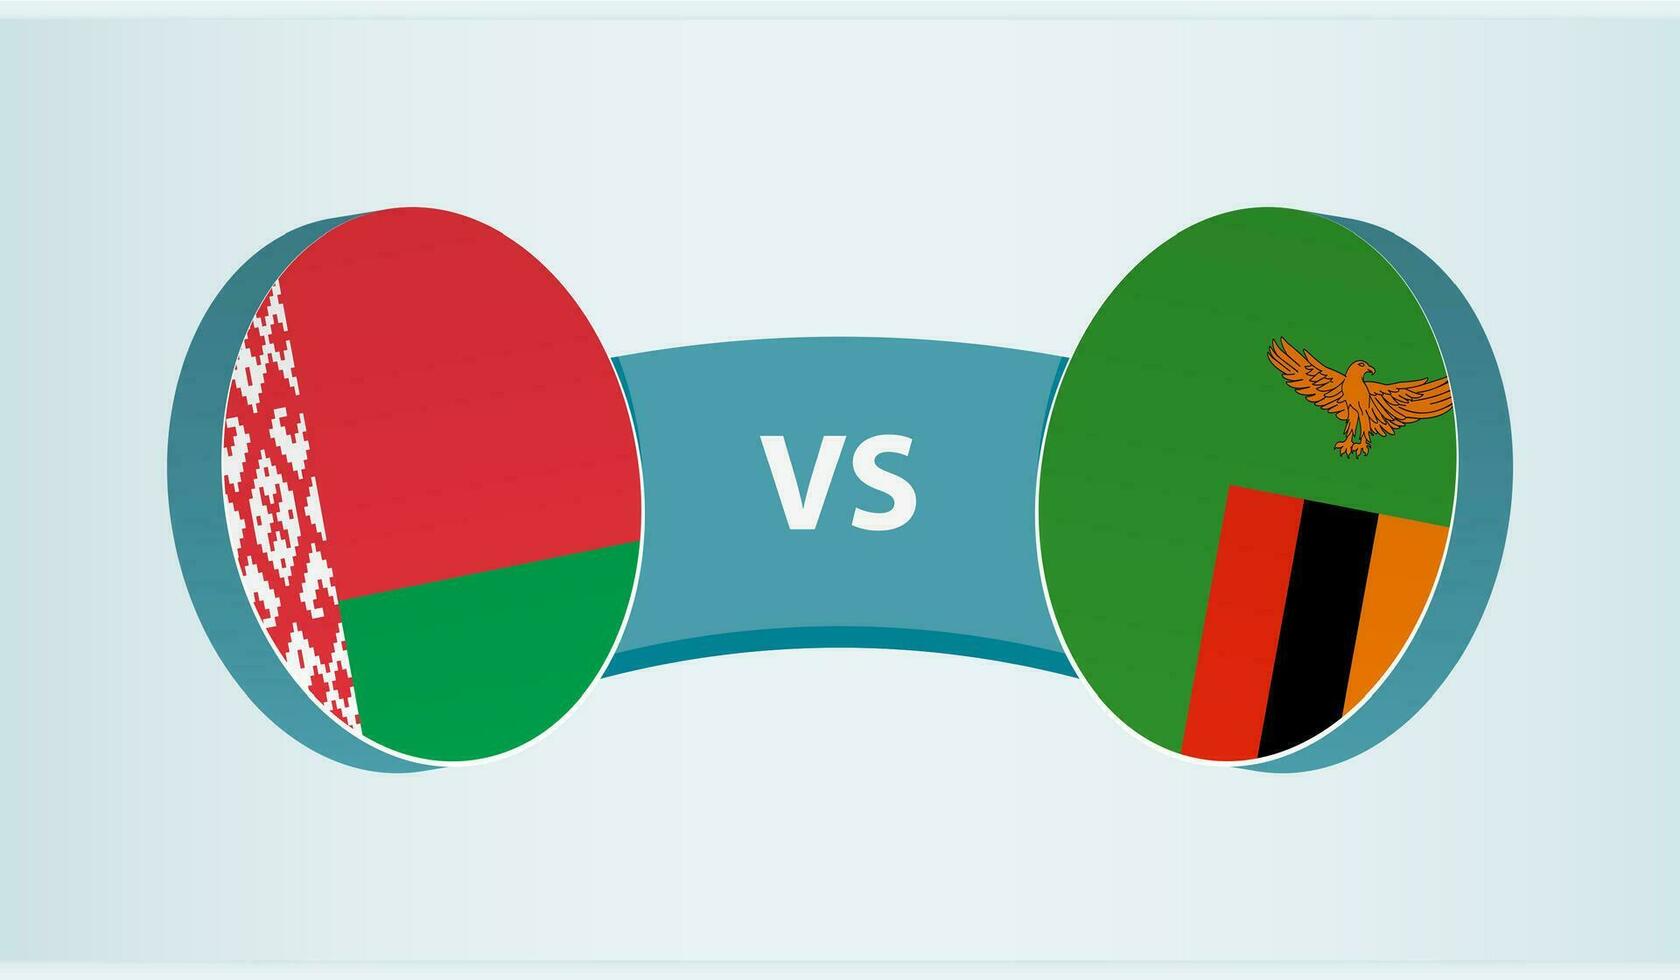 Vitryssland mot zambia, team sporter konkurrens begrepp. vektor